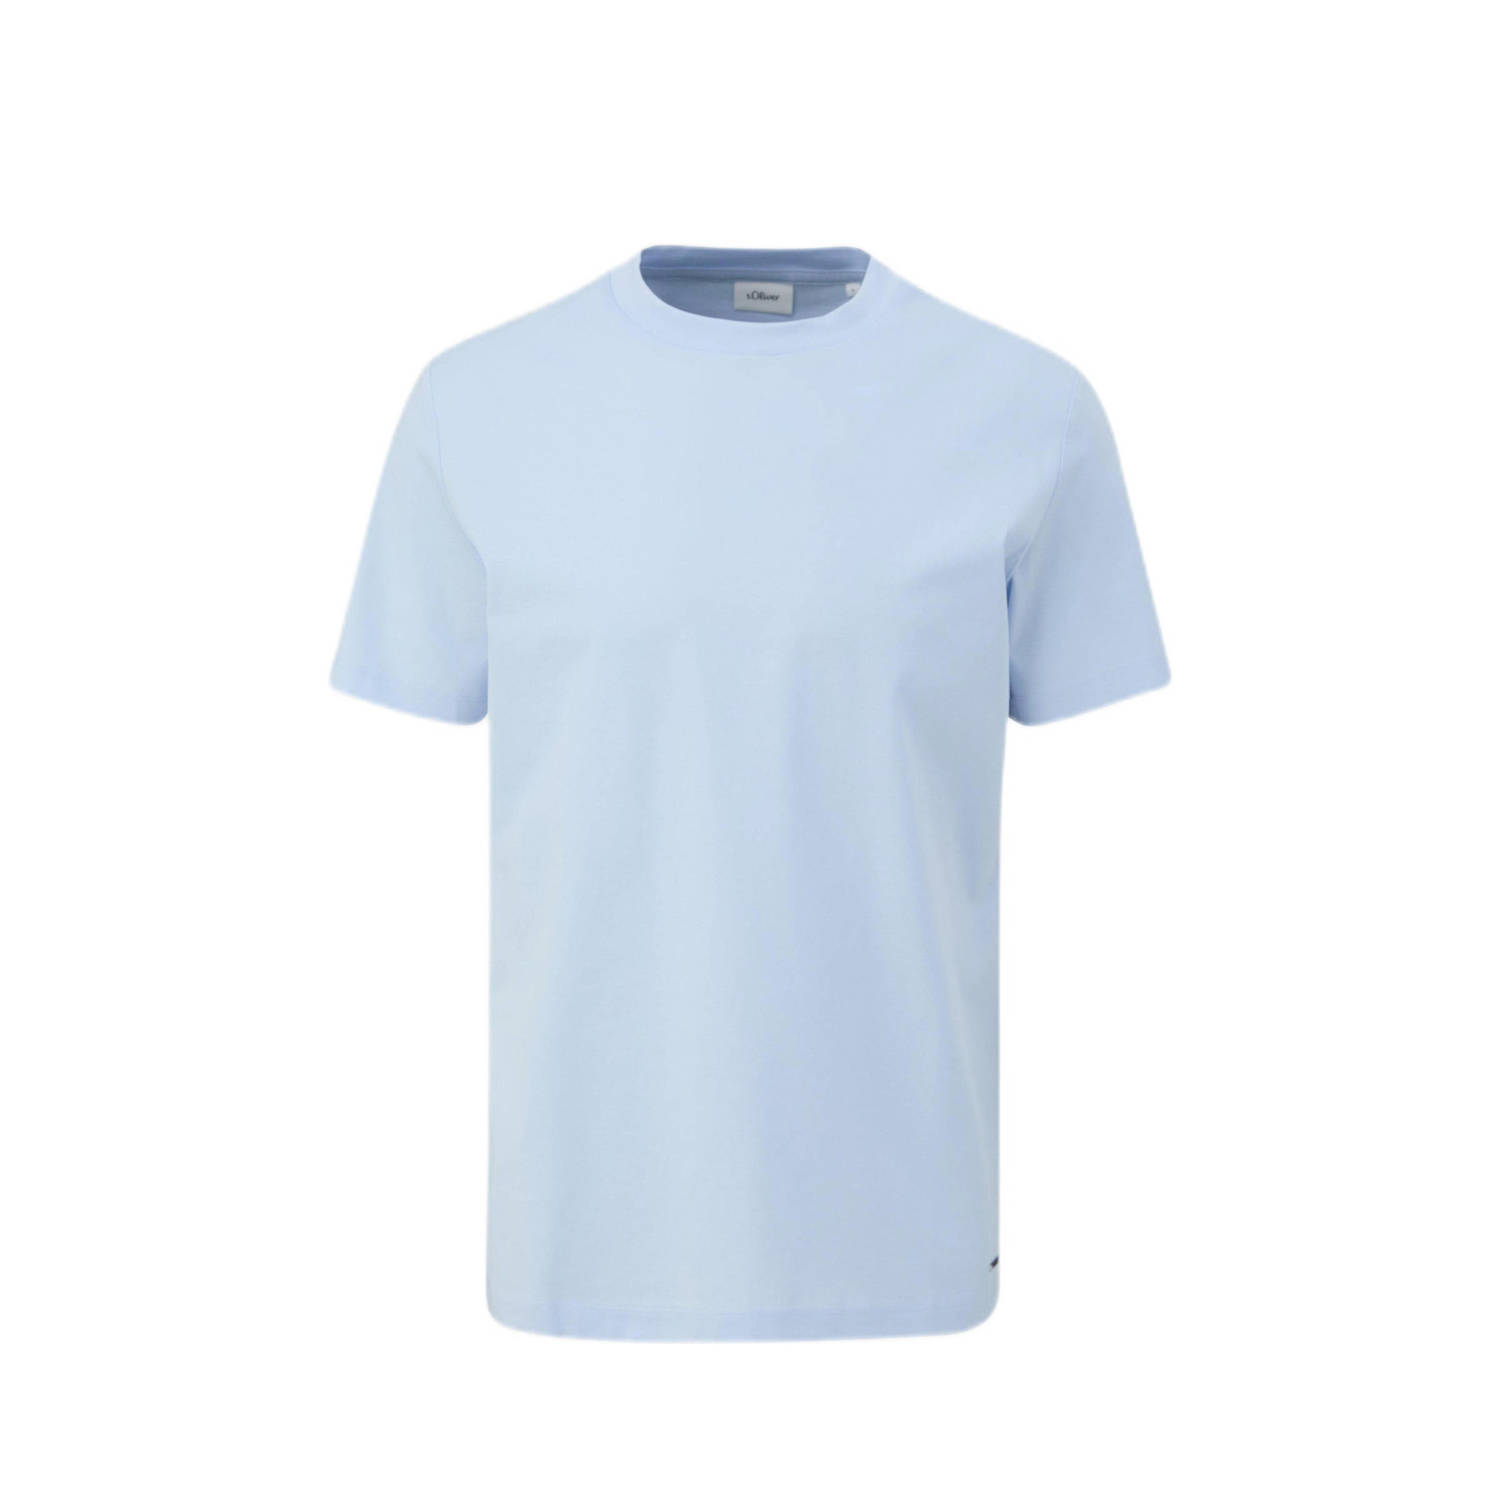 S.Oliver BLACK LABEL regular fit T-shirt lichtblauw